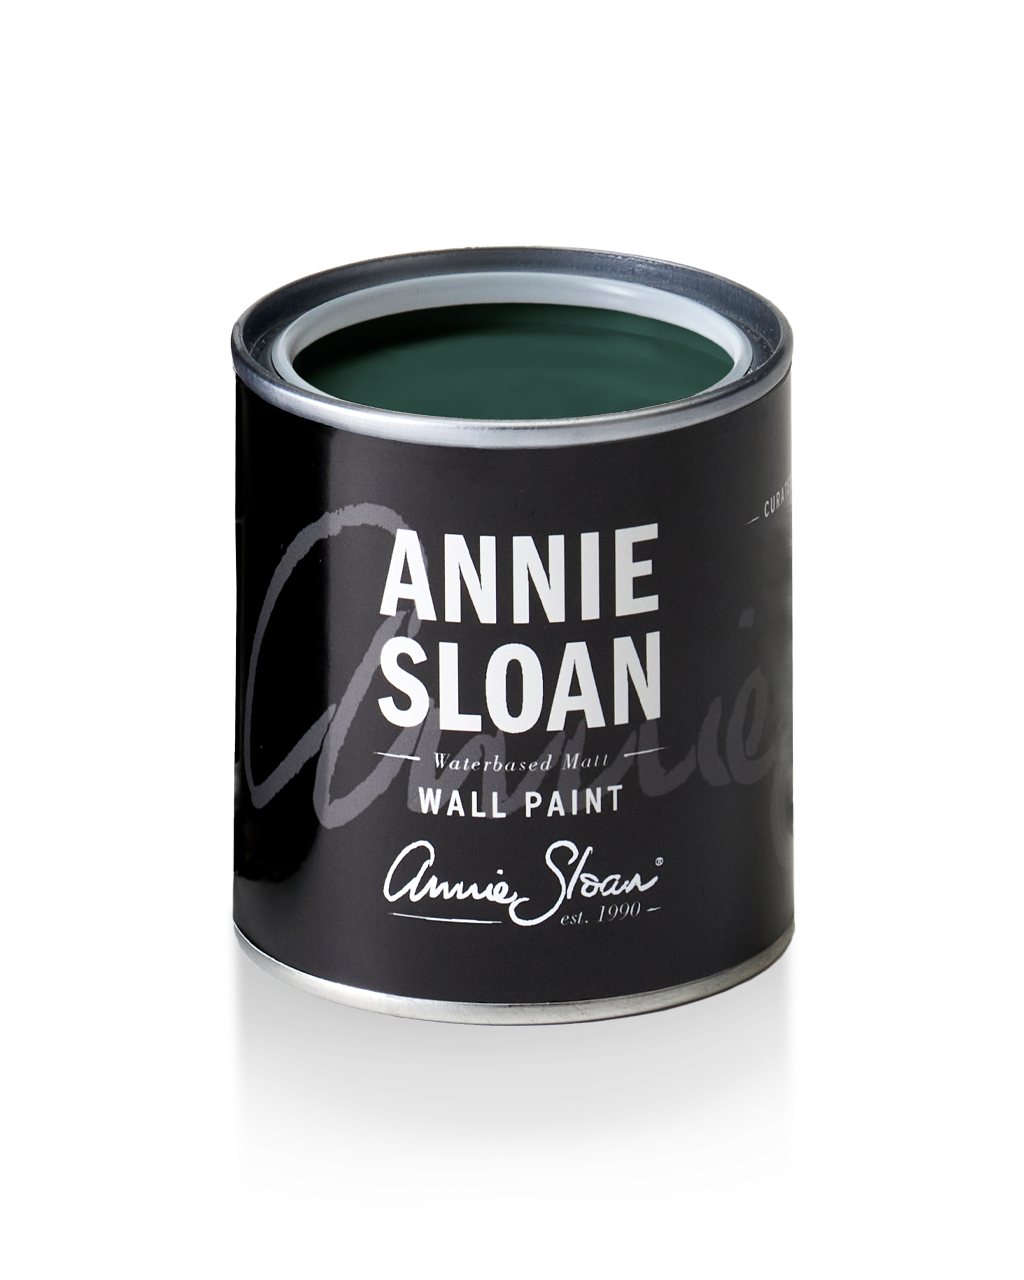 120ml of Knightsbridge Green wall paint by Annie Sloan